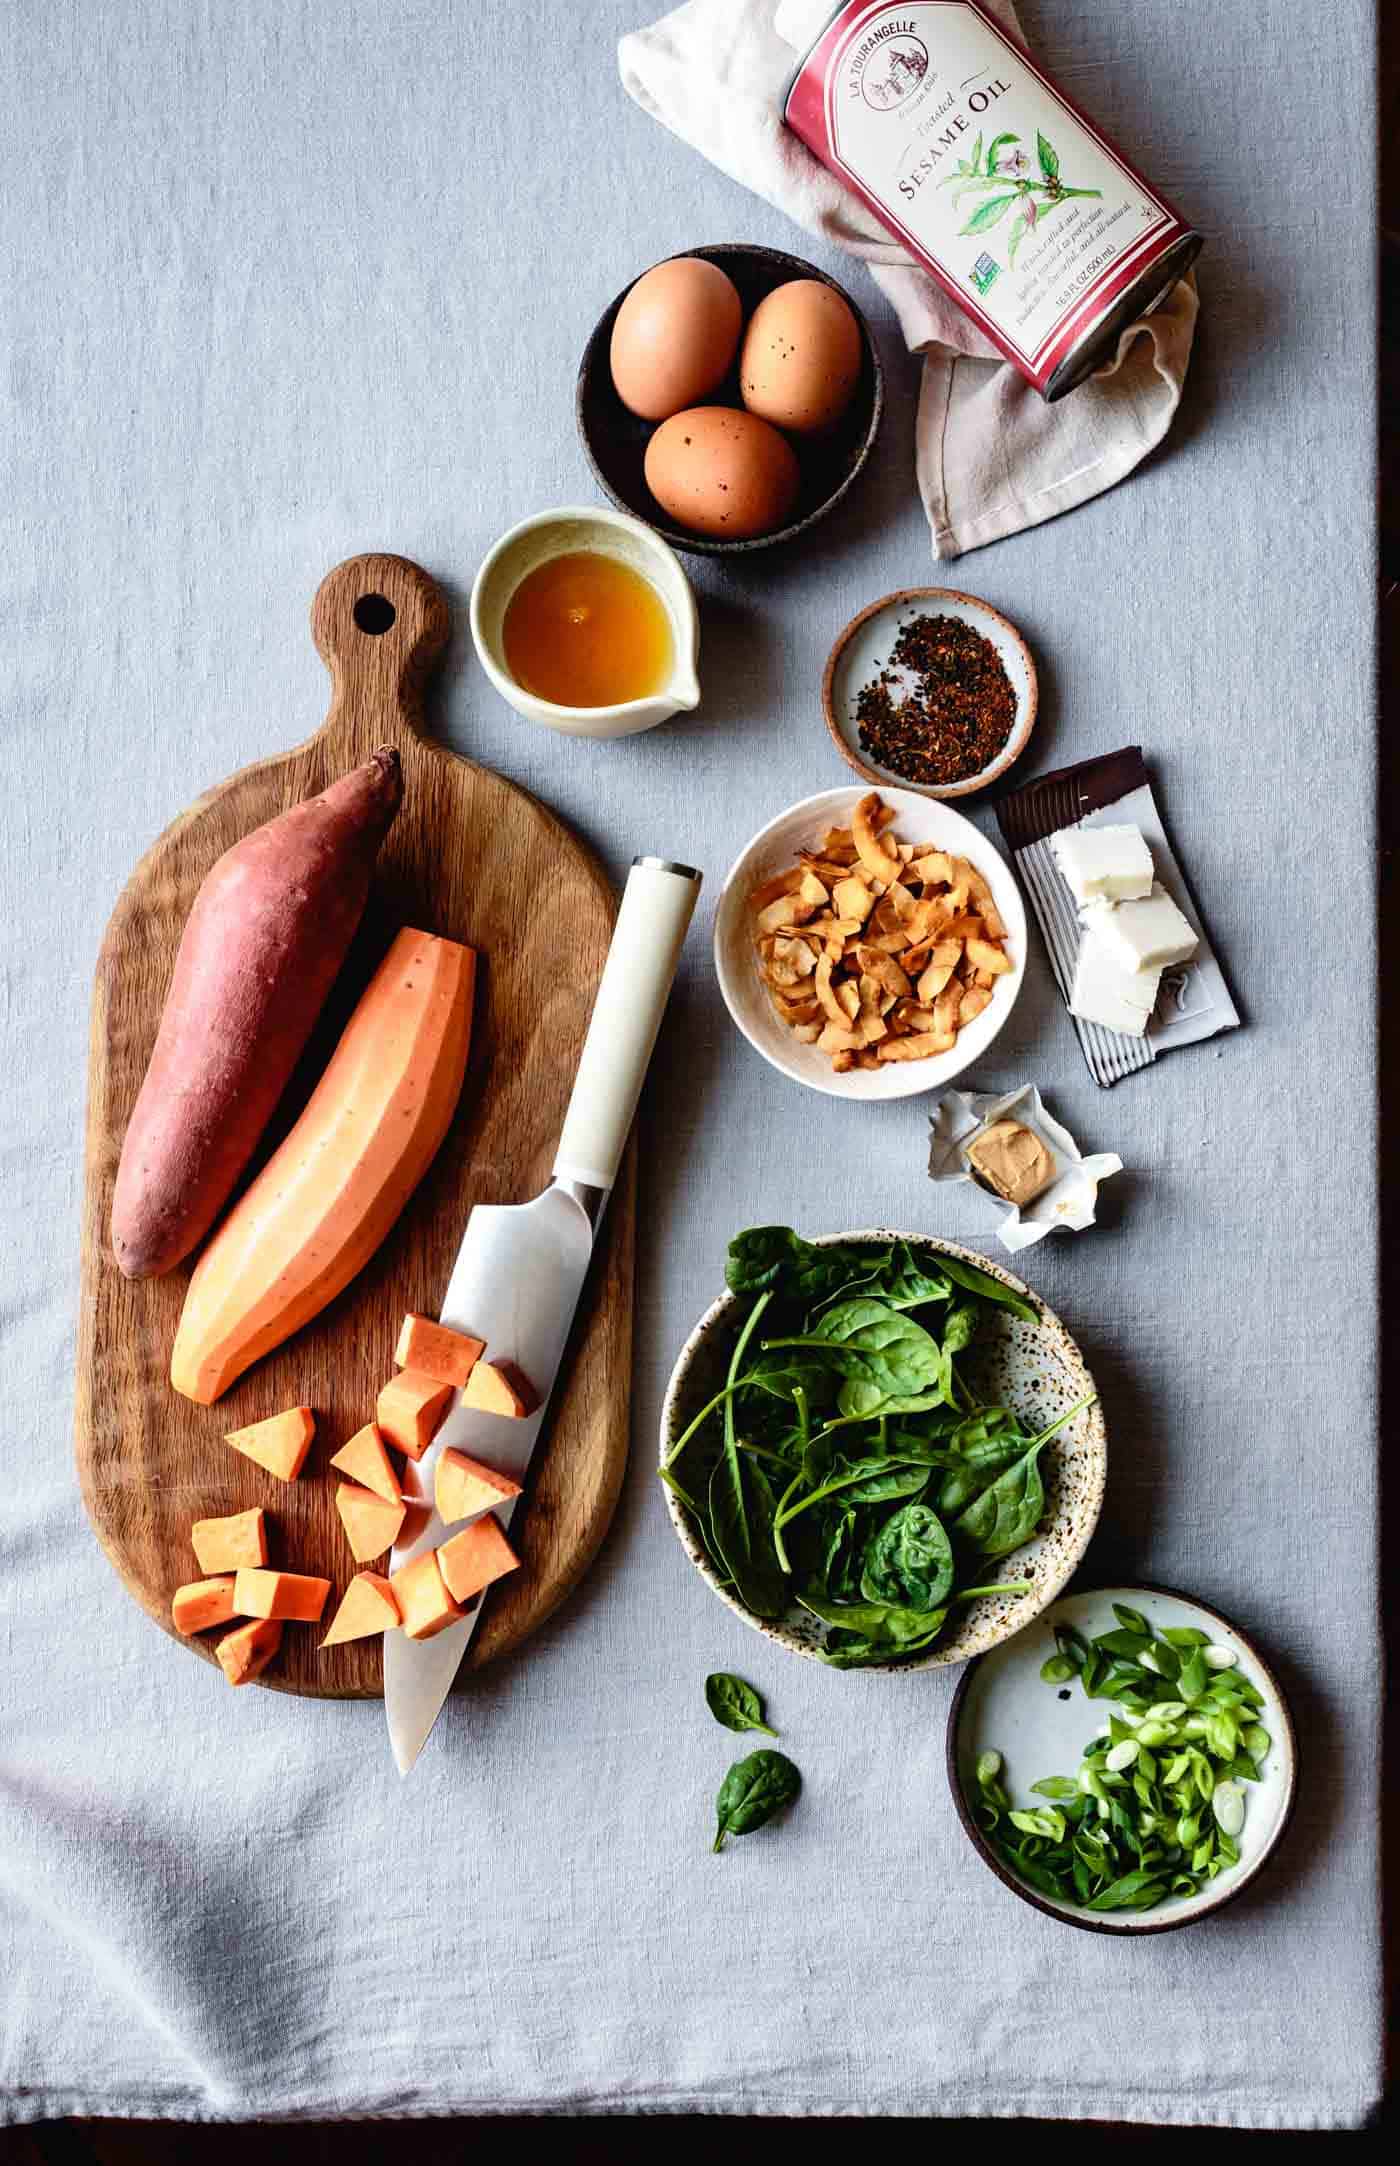 Ingredients for Sweet Potato Breakfast Bowl Recipe arranged on a linen surface